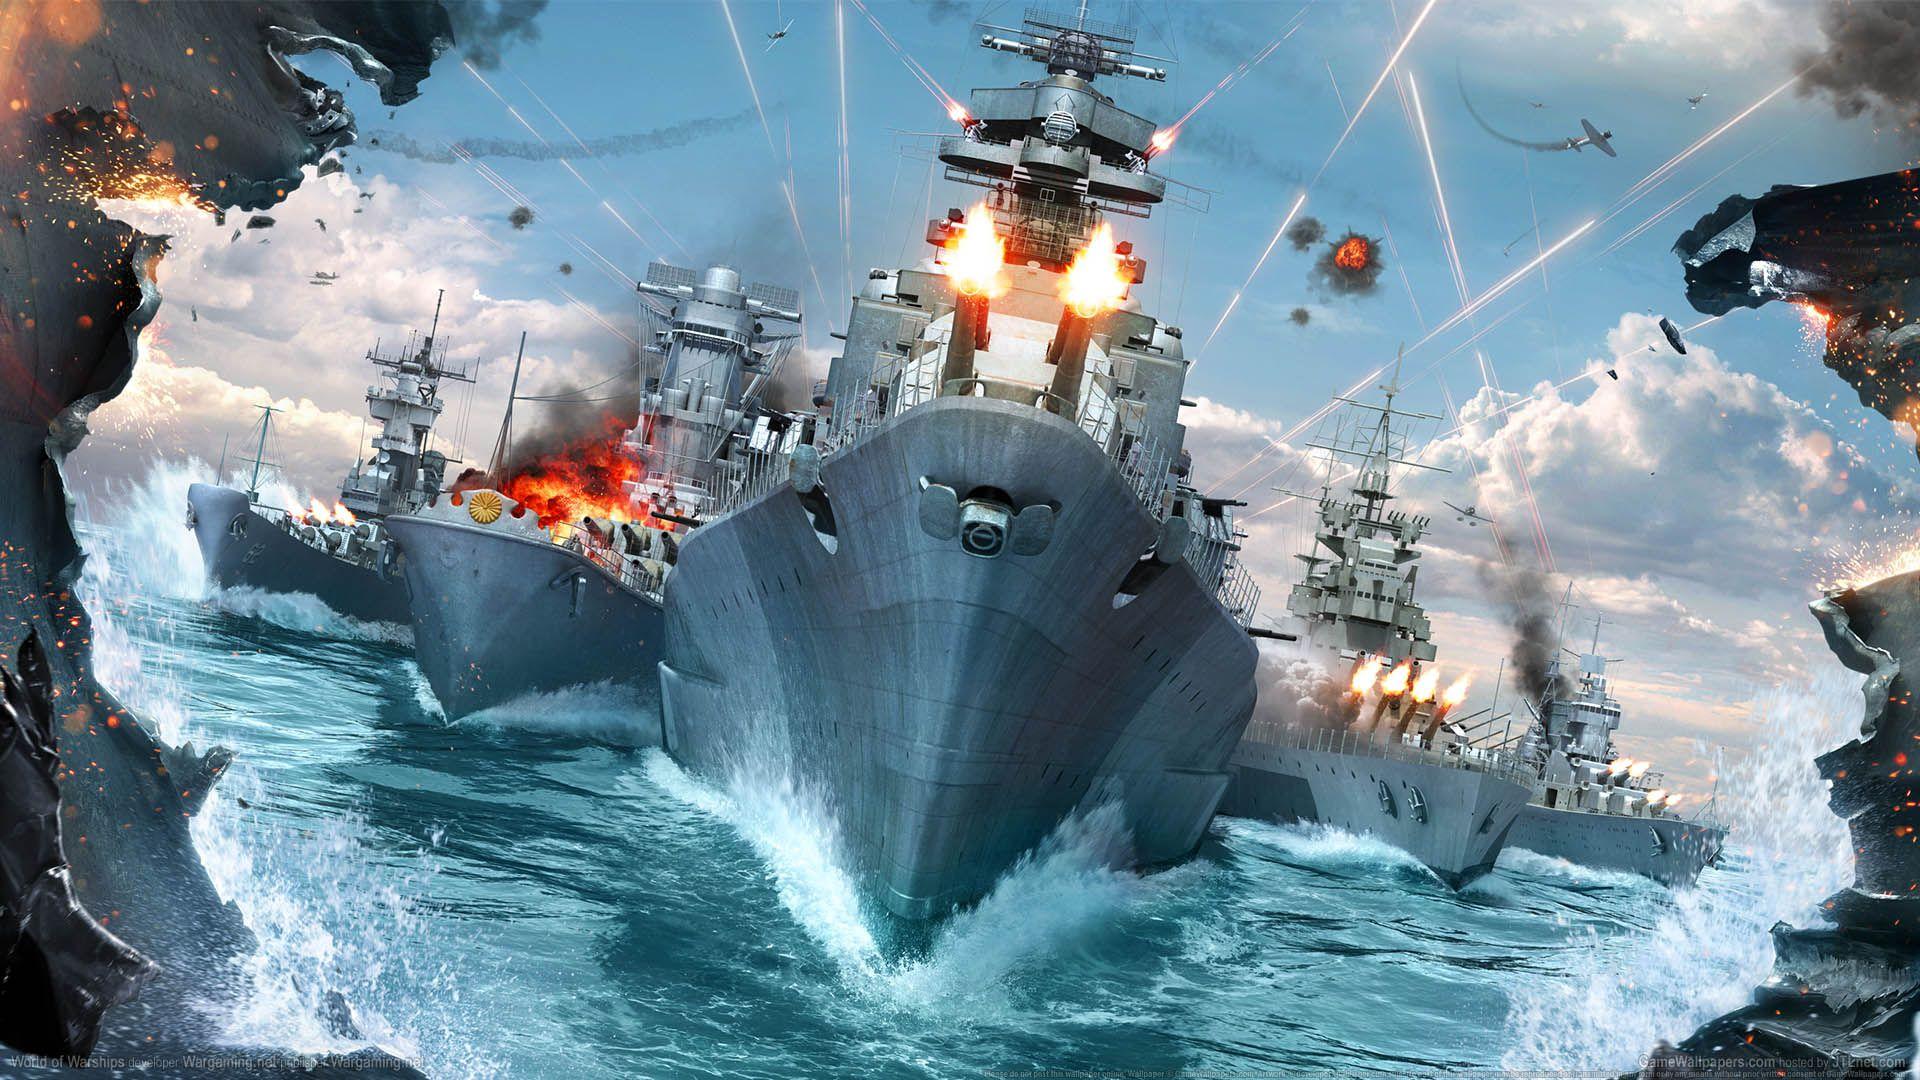 World of Warships wallpaper or desktop background